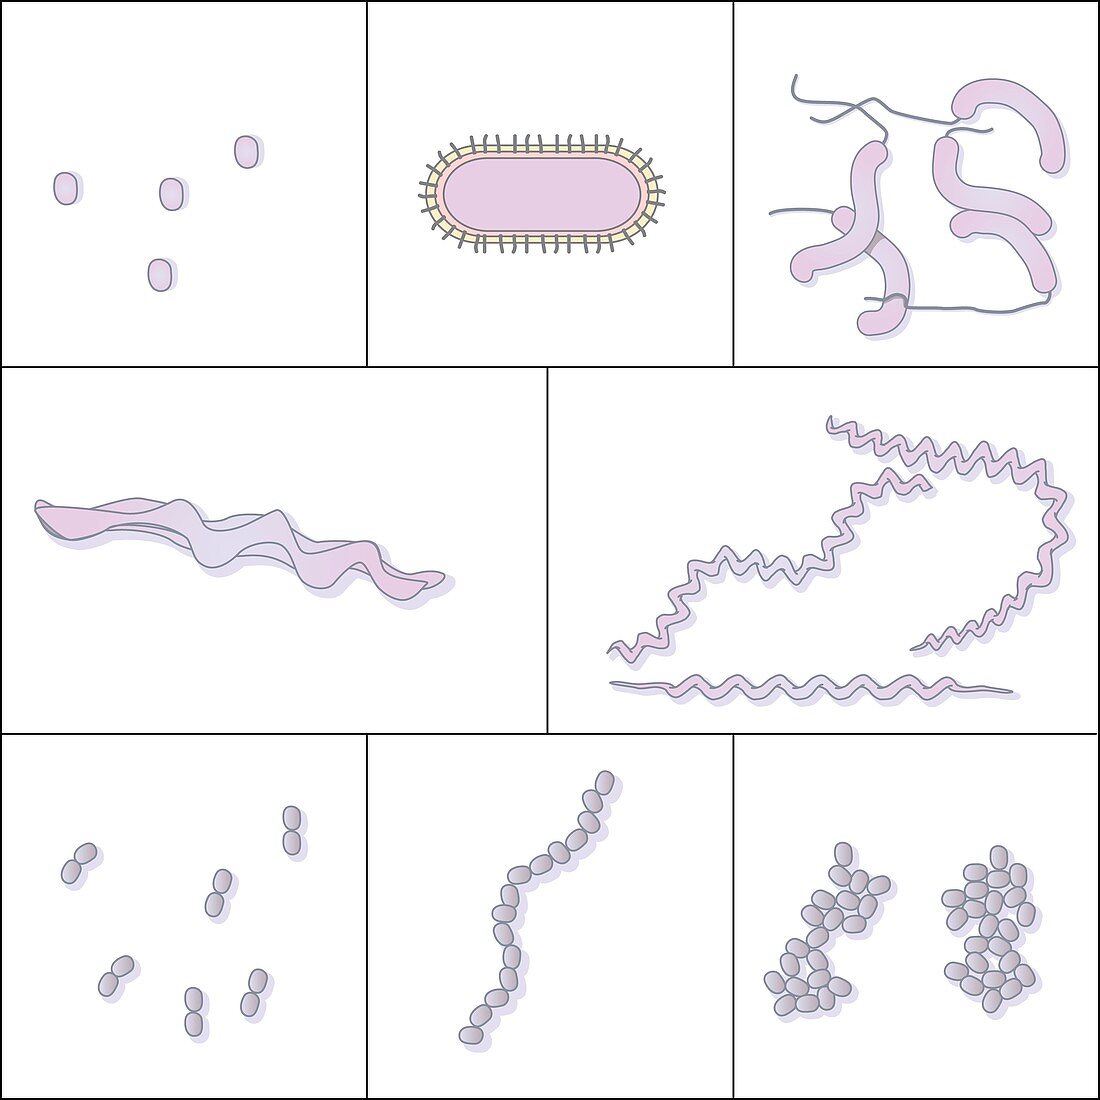 Bacteria shapes,artwork